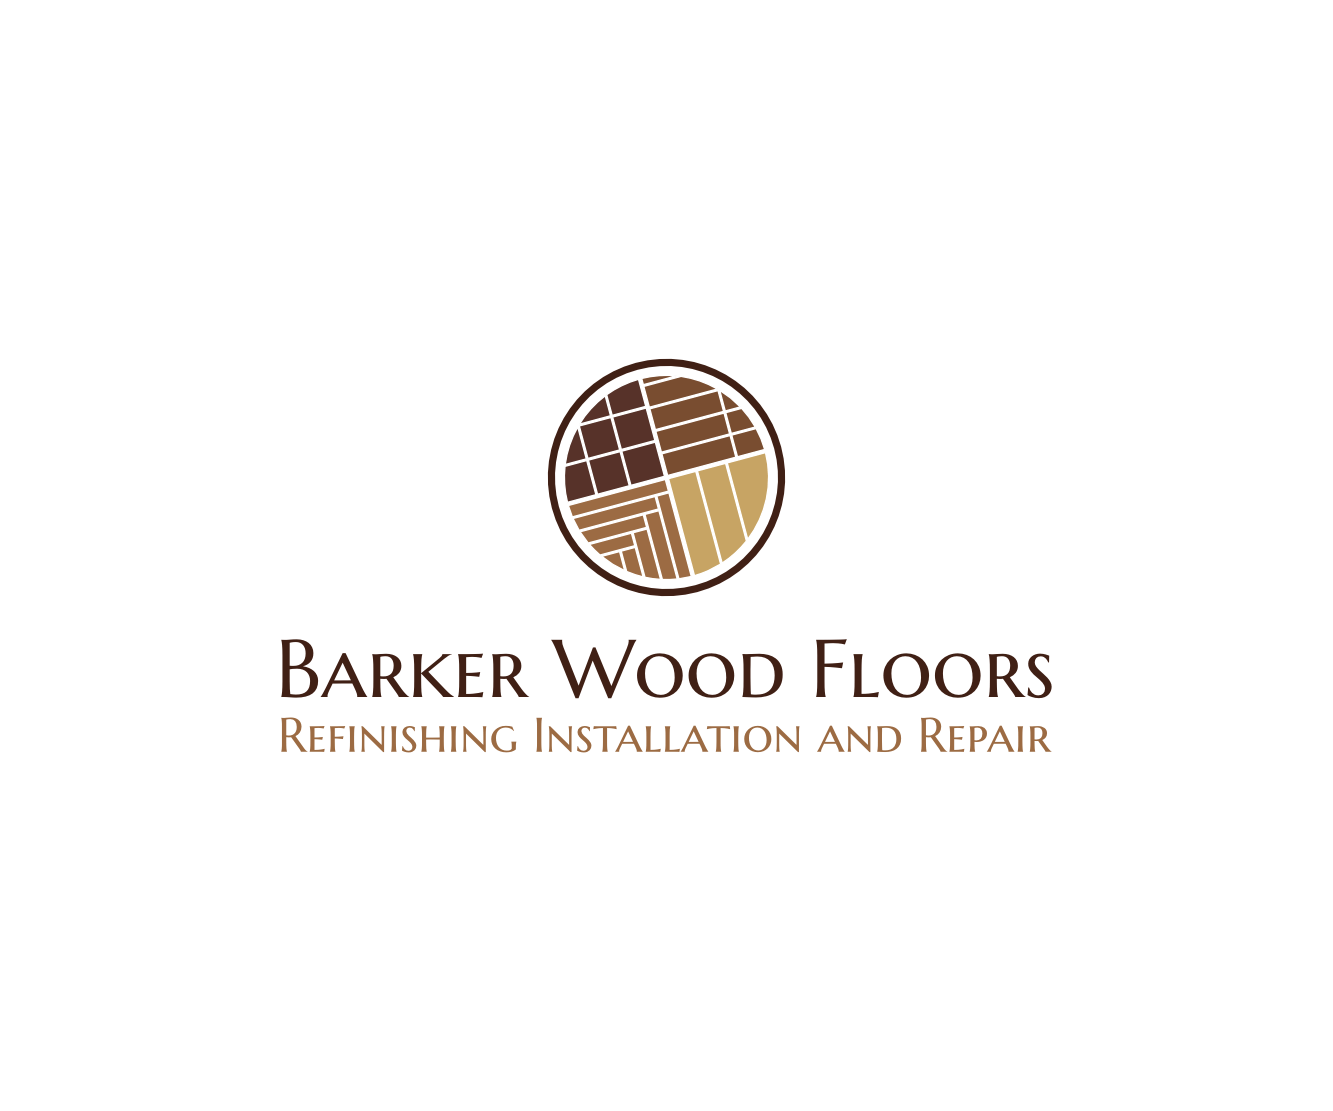 Floor Logo - Masculine, Bold, Woodworking Logo Design for Barker Wood Floors ...